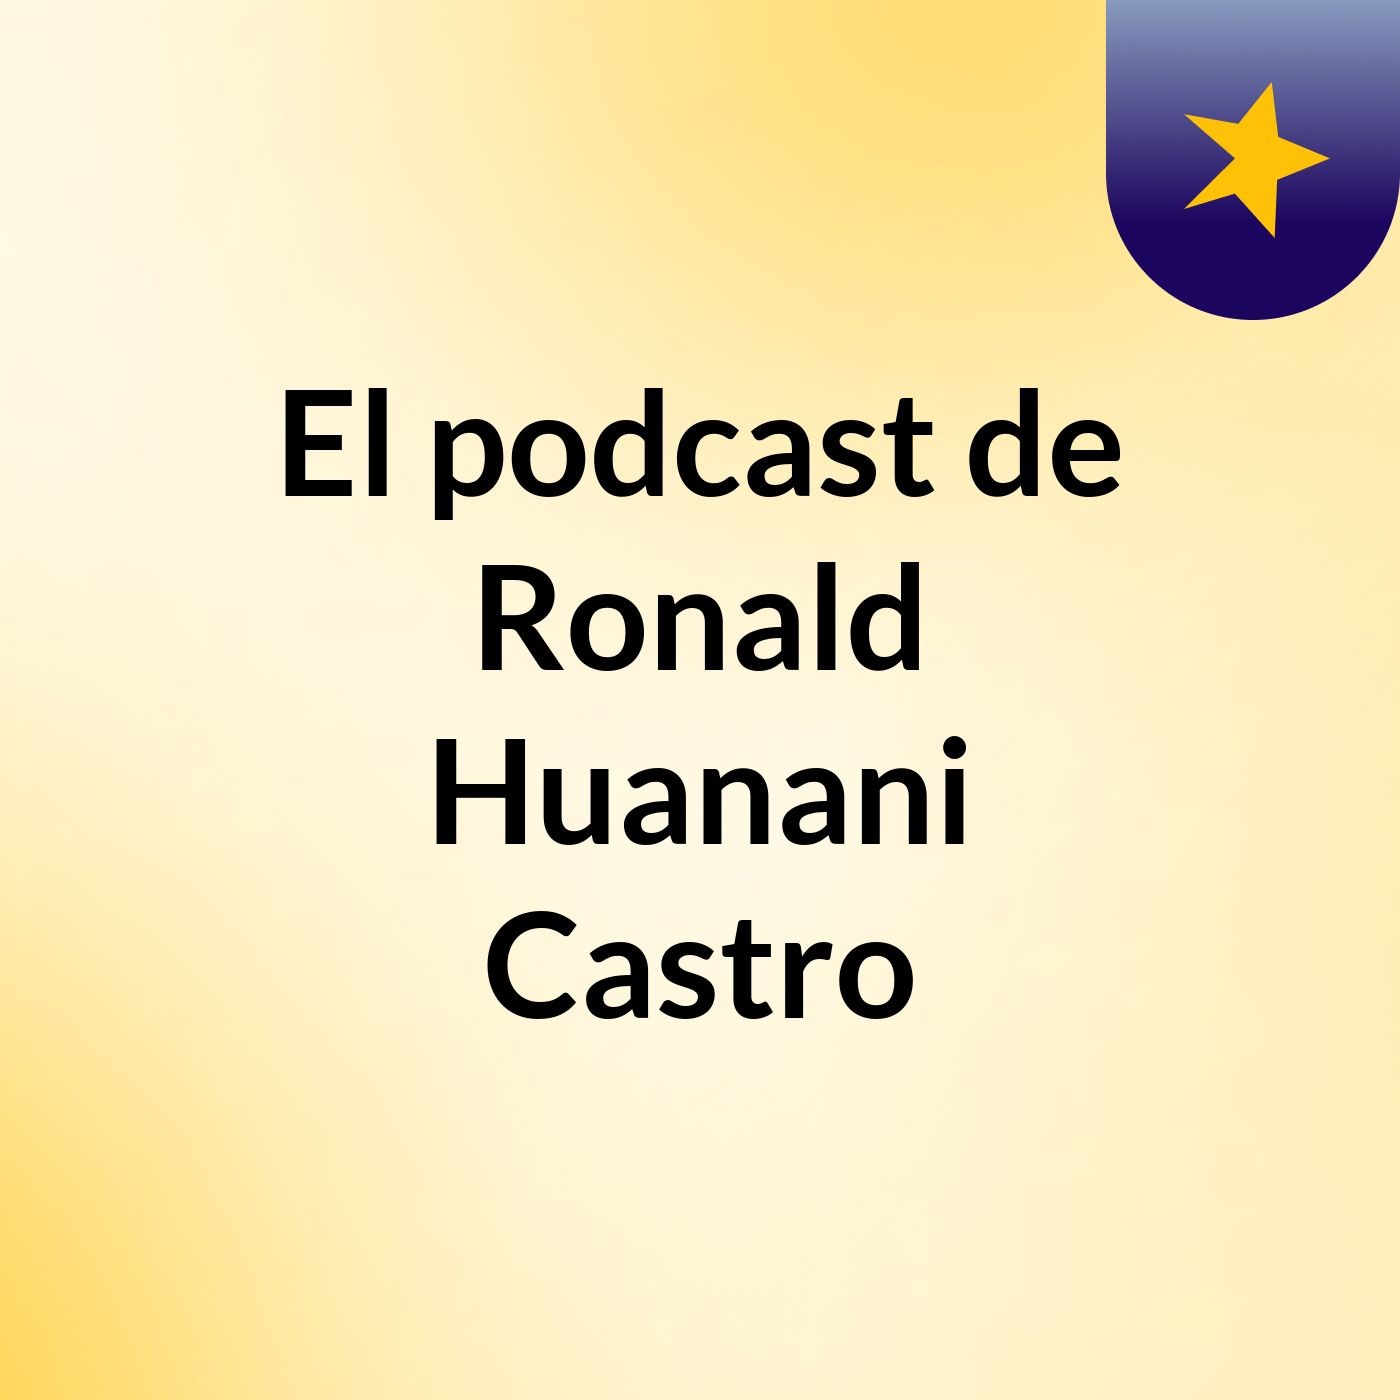 El podcast de Ronald Huanani Castro